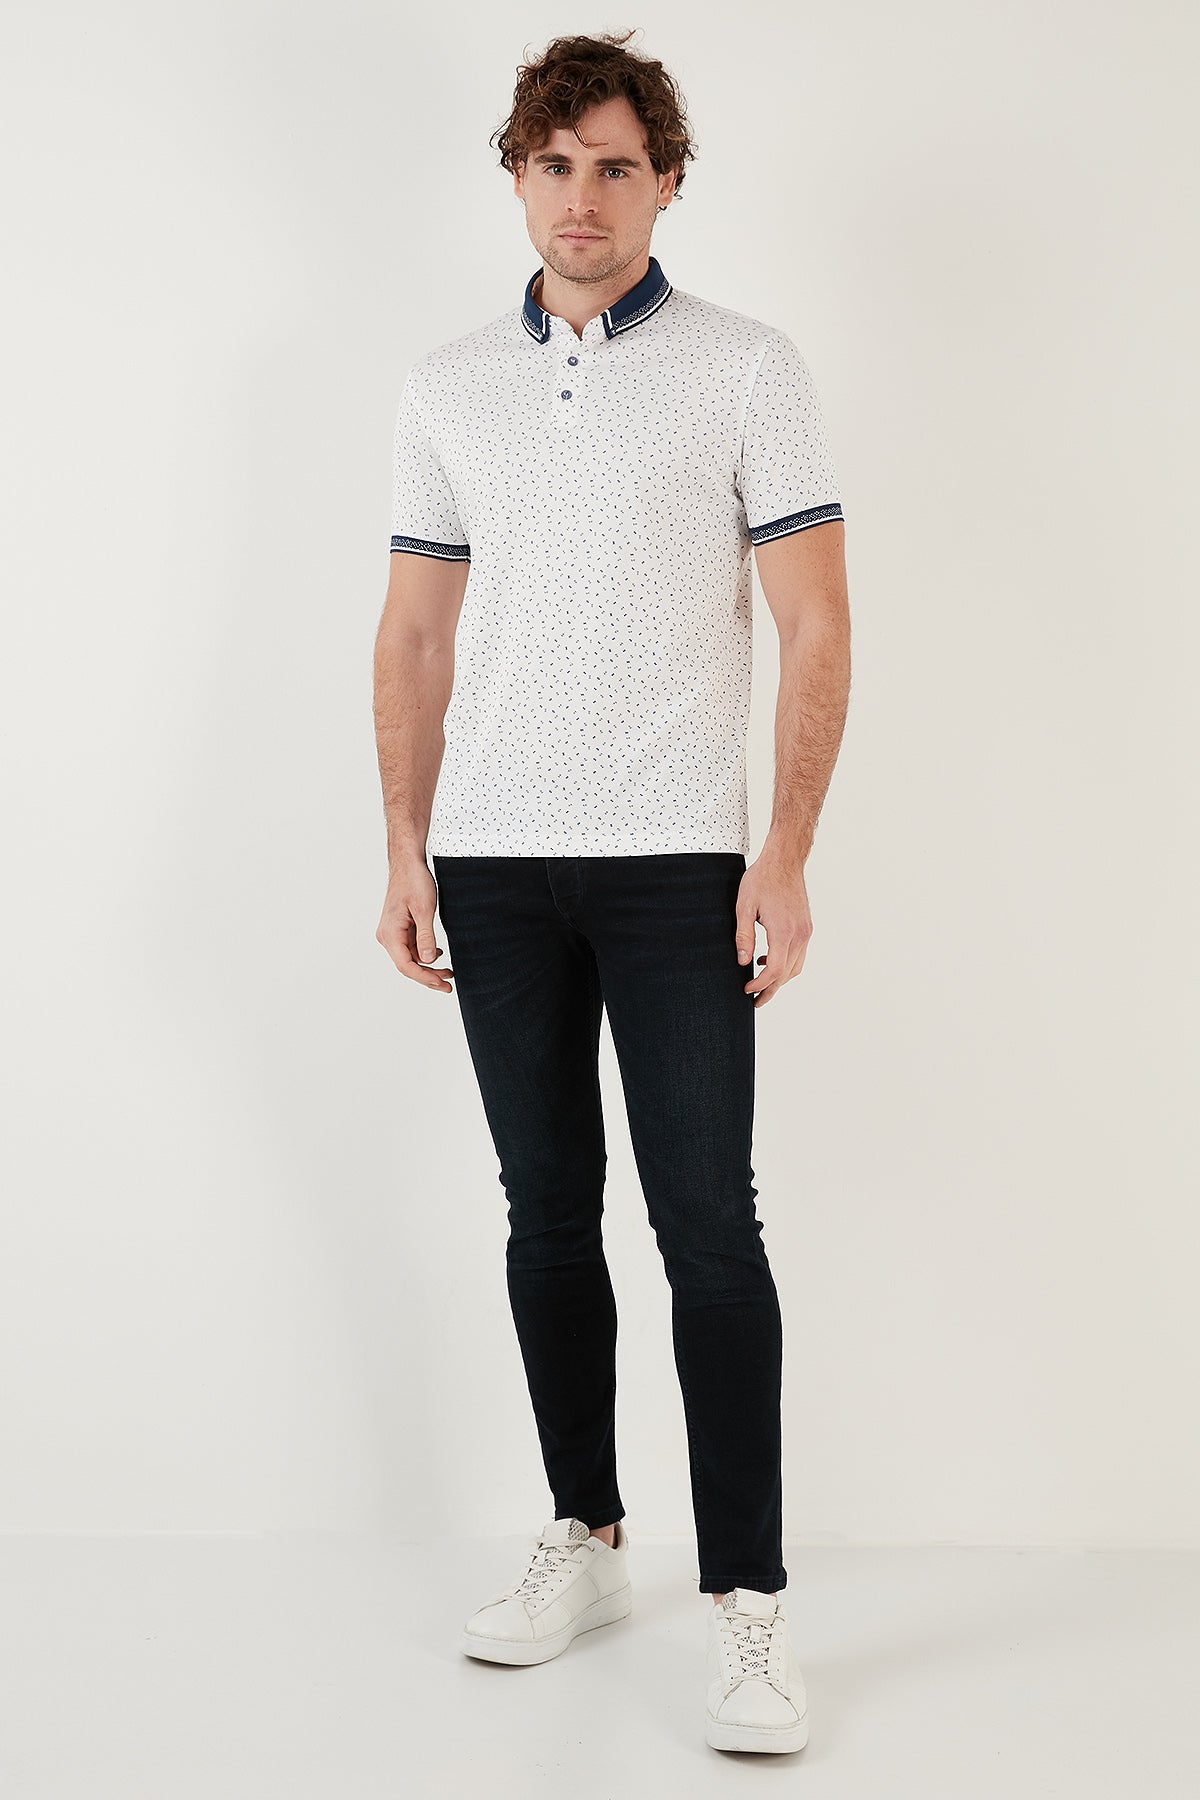 Buratti Pamuk Karışımlı Desenli Slim Fit Erkek Polo T Shirt 646B3200 BEYAZ